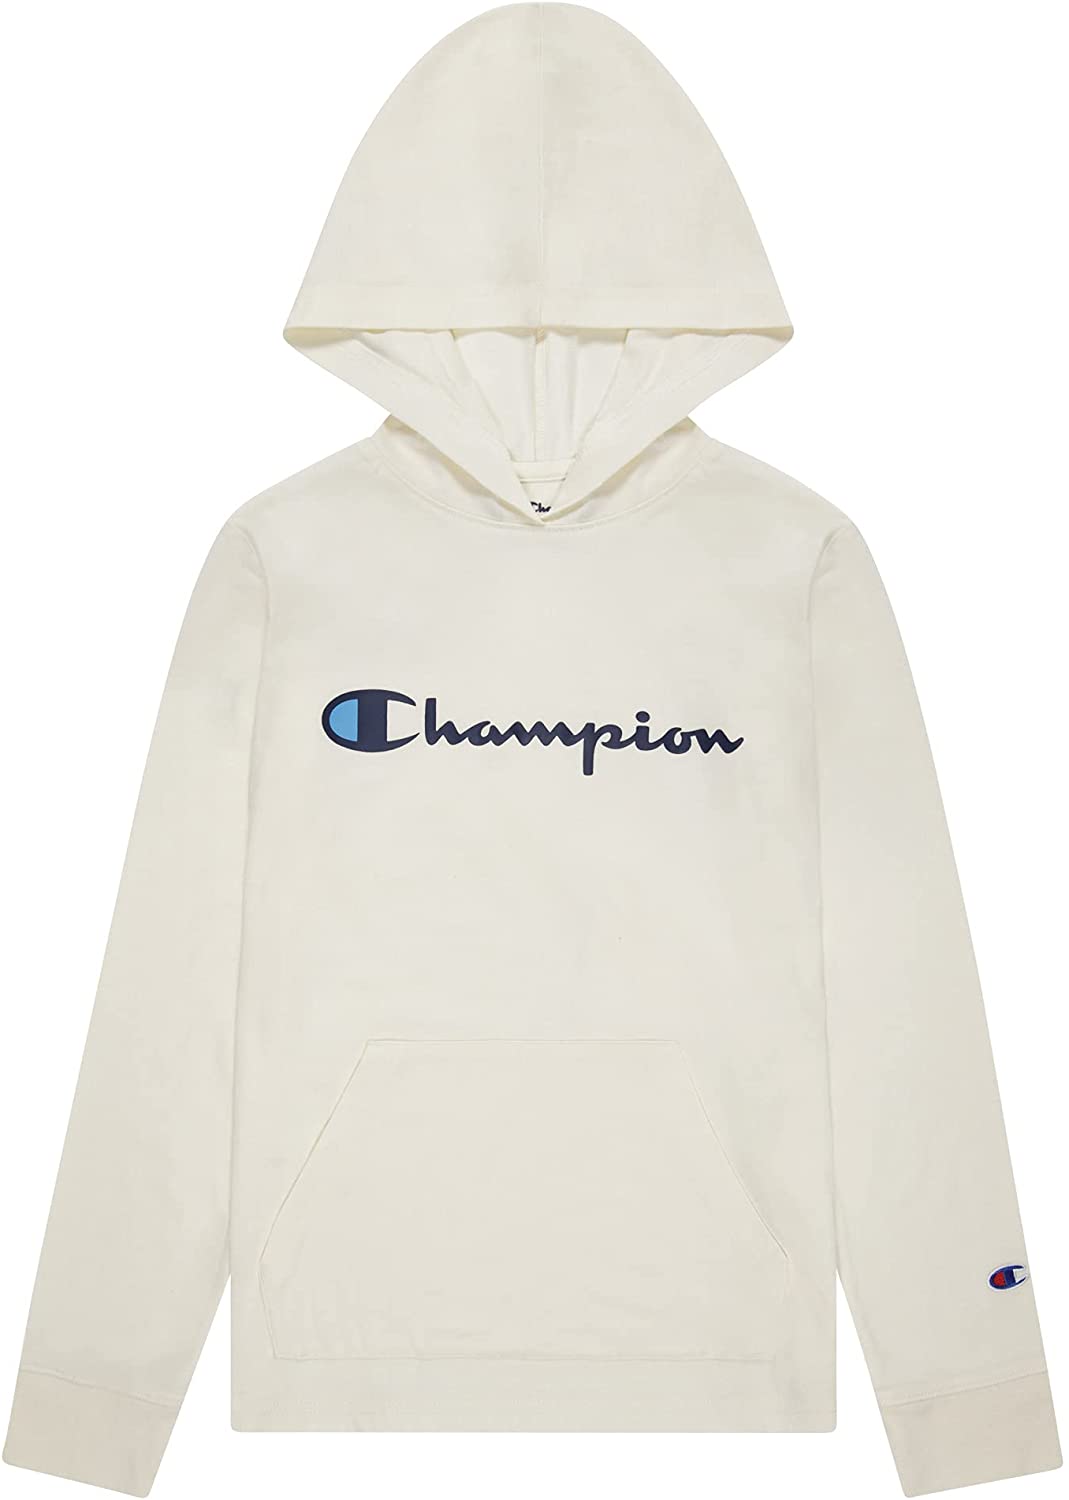 Champion Boys Long Sleeve Classic Hooded Tee Shirt Kids Clothes